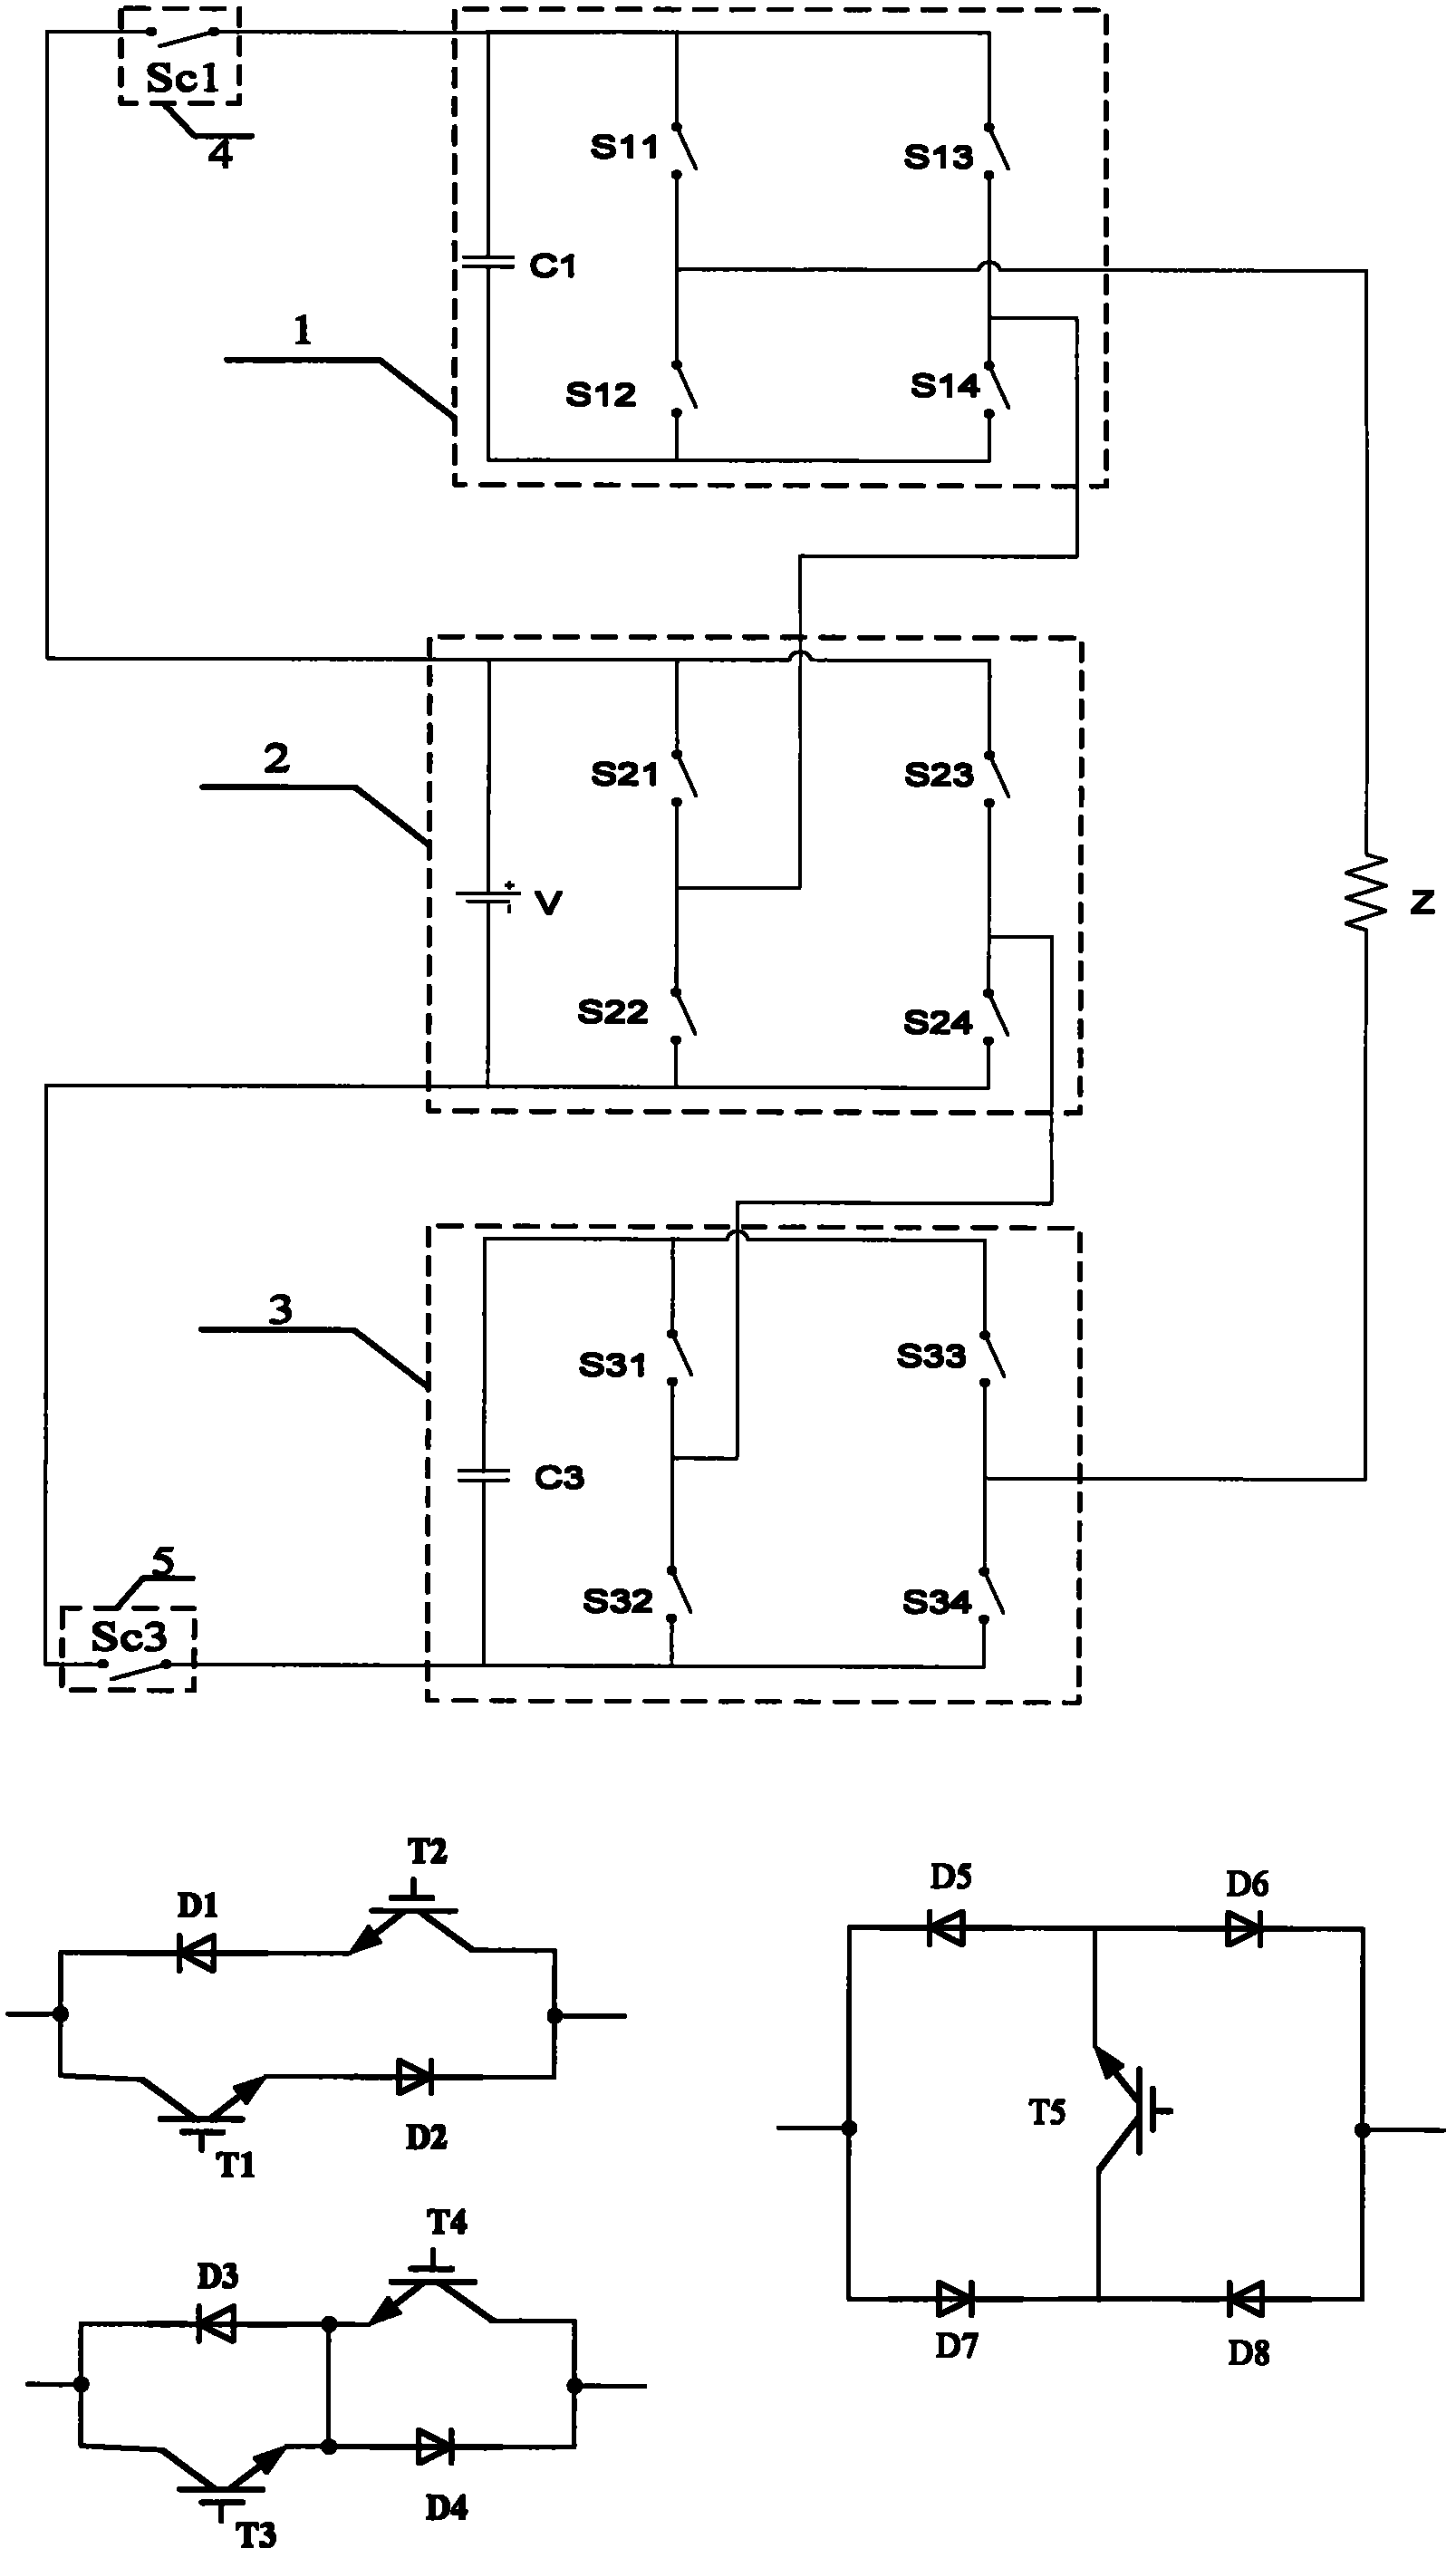 Single-power supply cascade multi-level converter